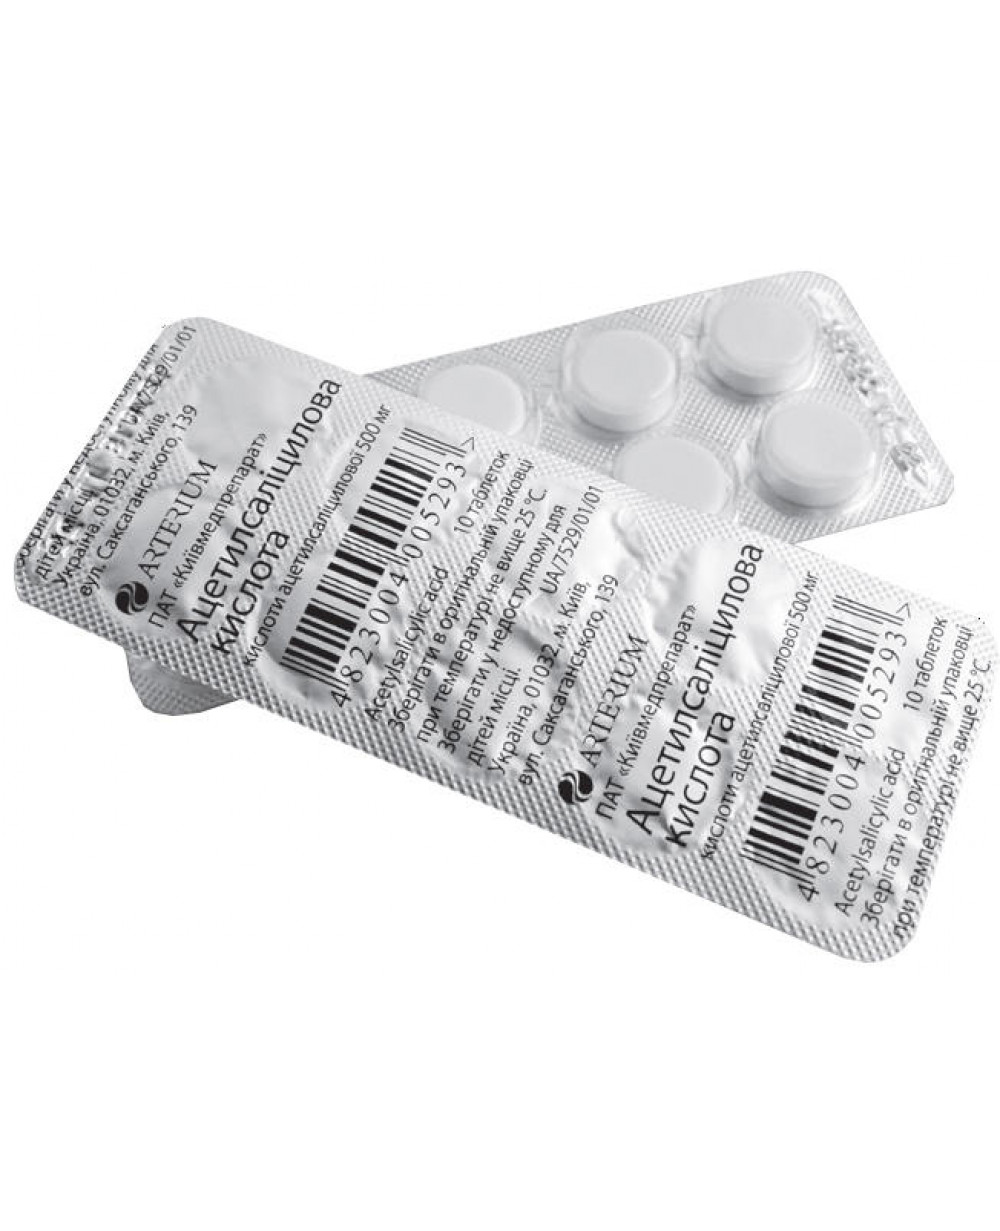 2750 БЛІМОЛ - Paracetamol